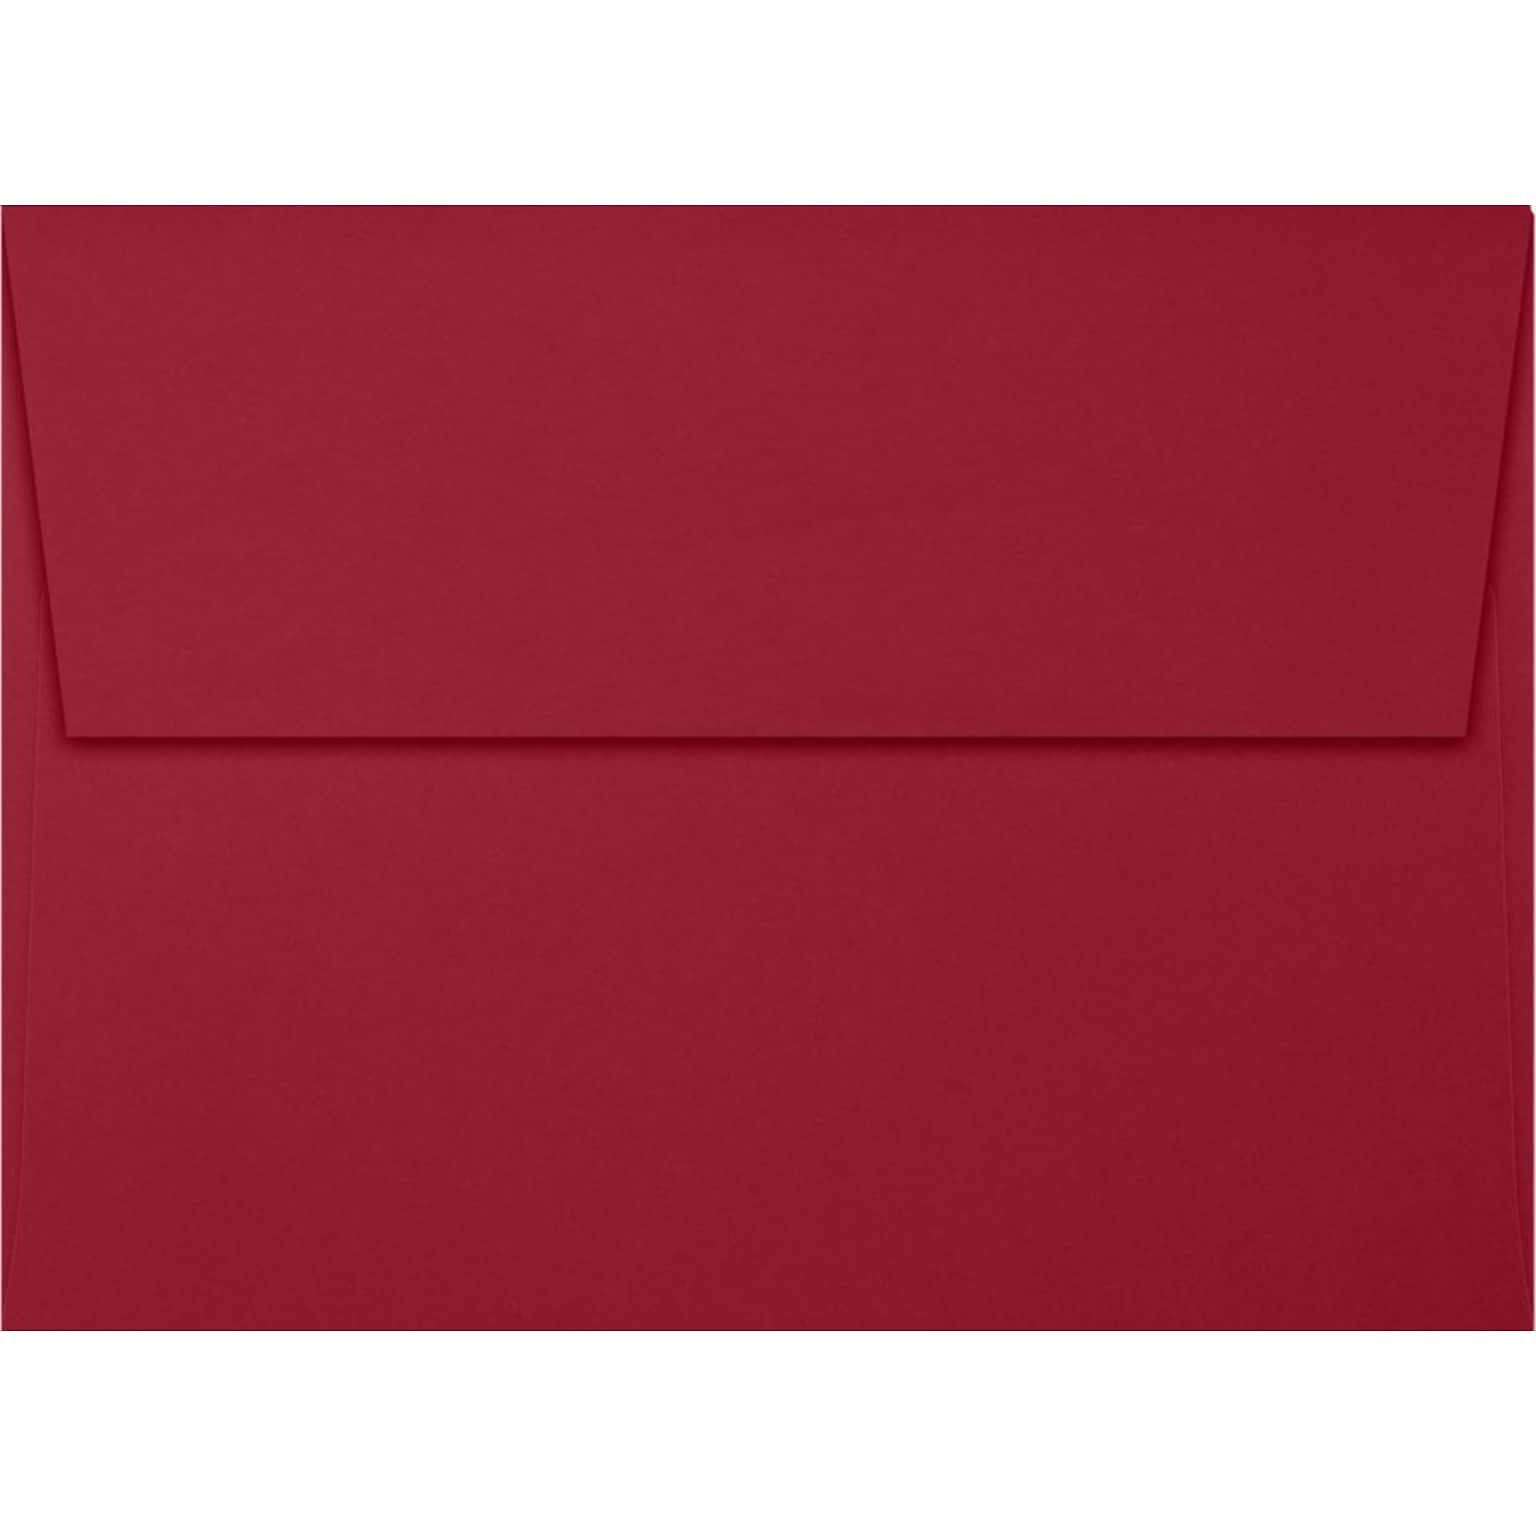 LUX A7 Invitation Envelopes (5 1/4 x 7 1/4) 50/Box, Garnet (EX4880-26-50)